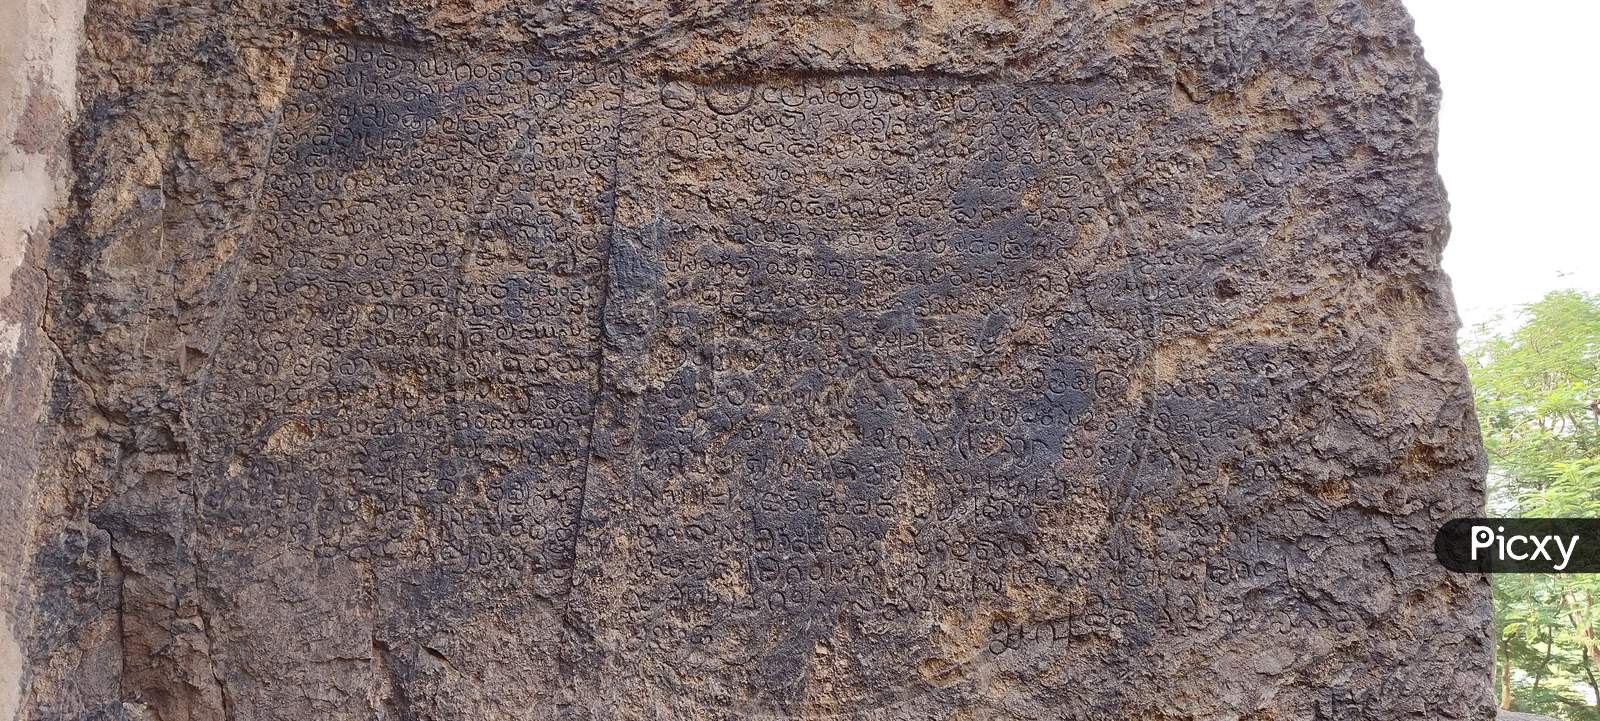 7th century's stone inscription in undavalli caves near vijayawada in india. 22 November  2020